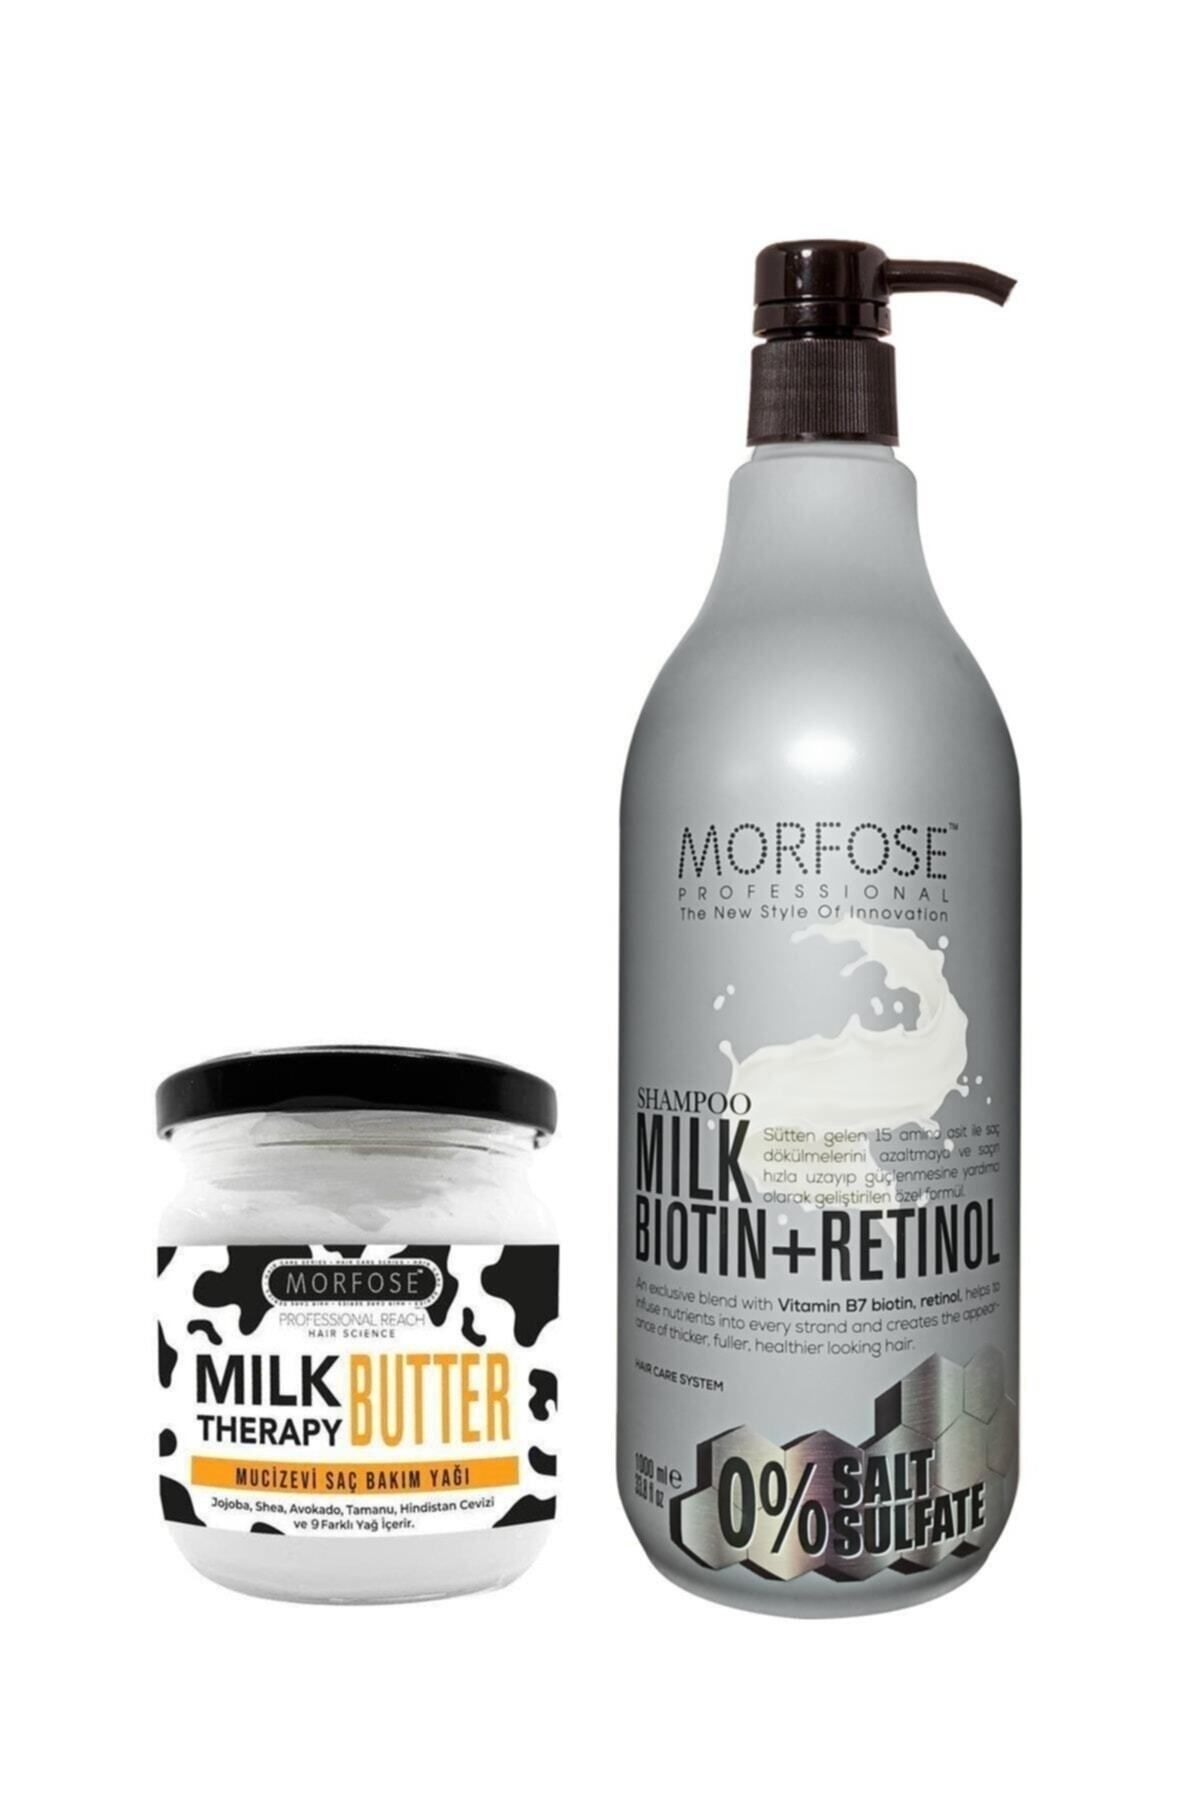 Morfose Milk Therapy Butter+sülfatsız Milk Biotin+retinol Içerikli Tuzsuz Şampuan 1000 Ml